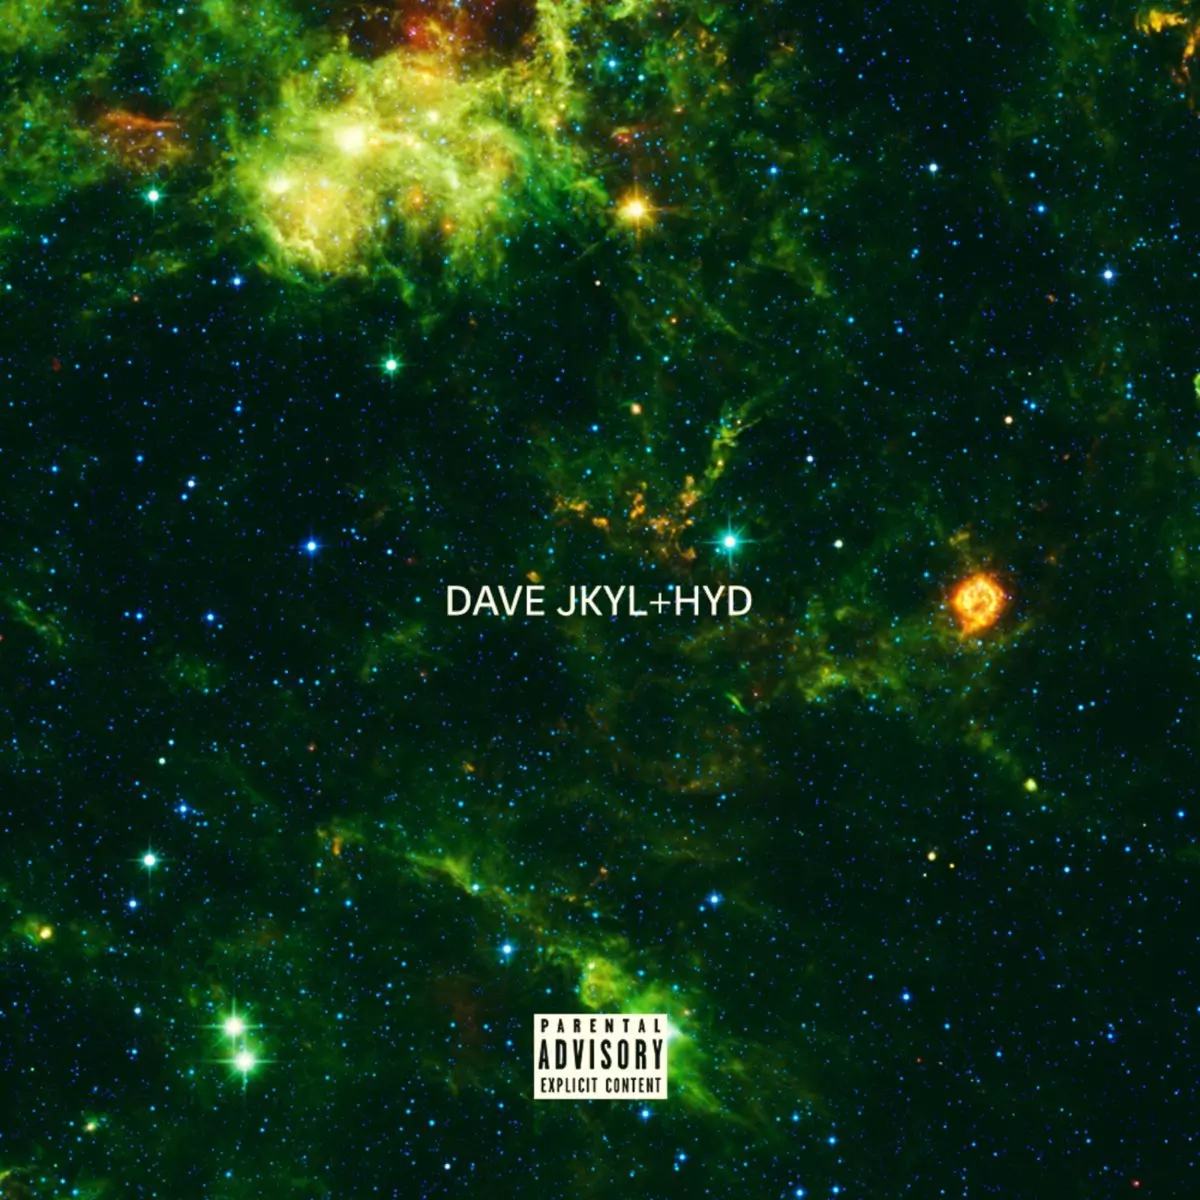 JKYL+HYD - Single - Album by Dave - Apple Music